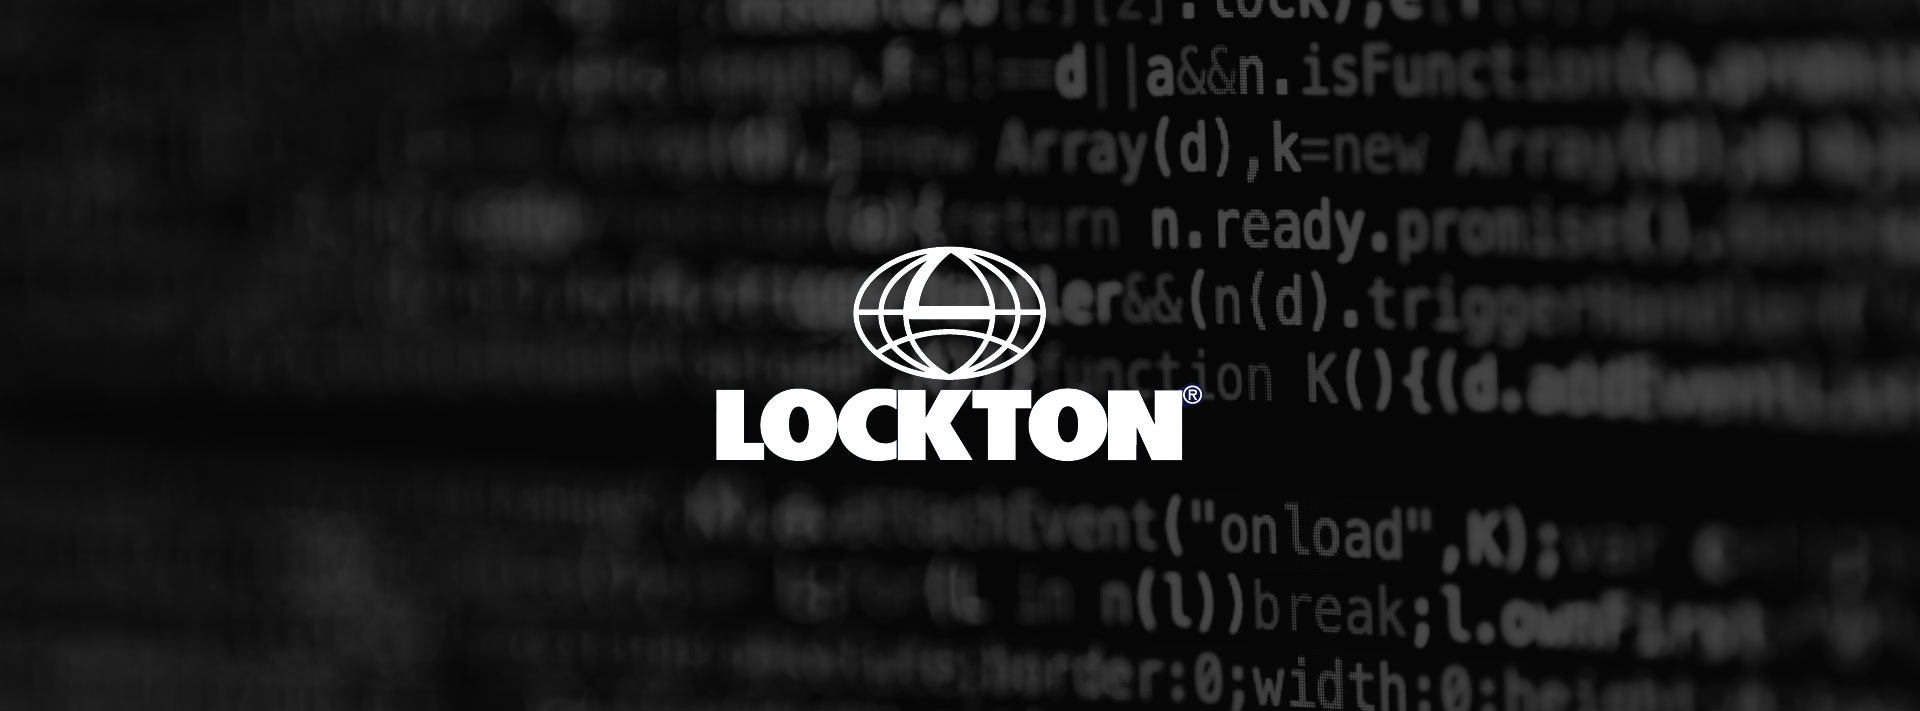 lockton cloud transformation case study